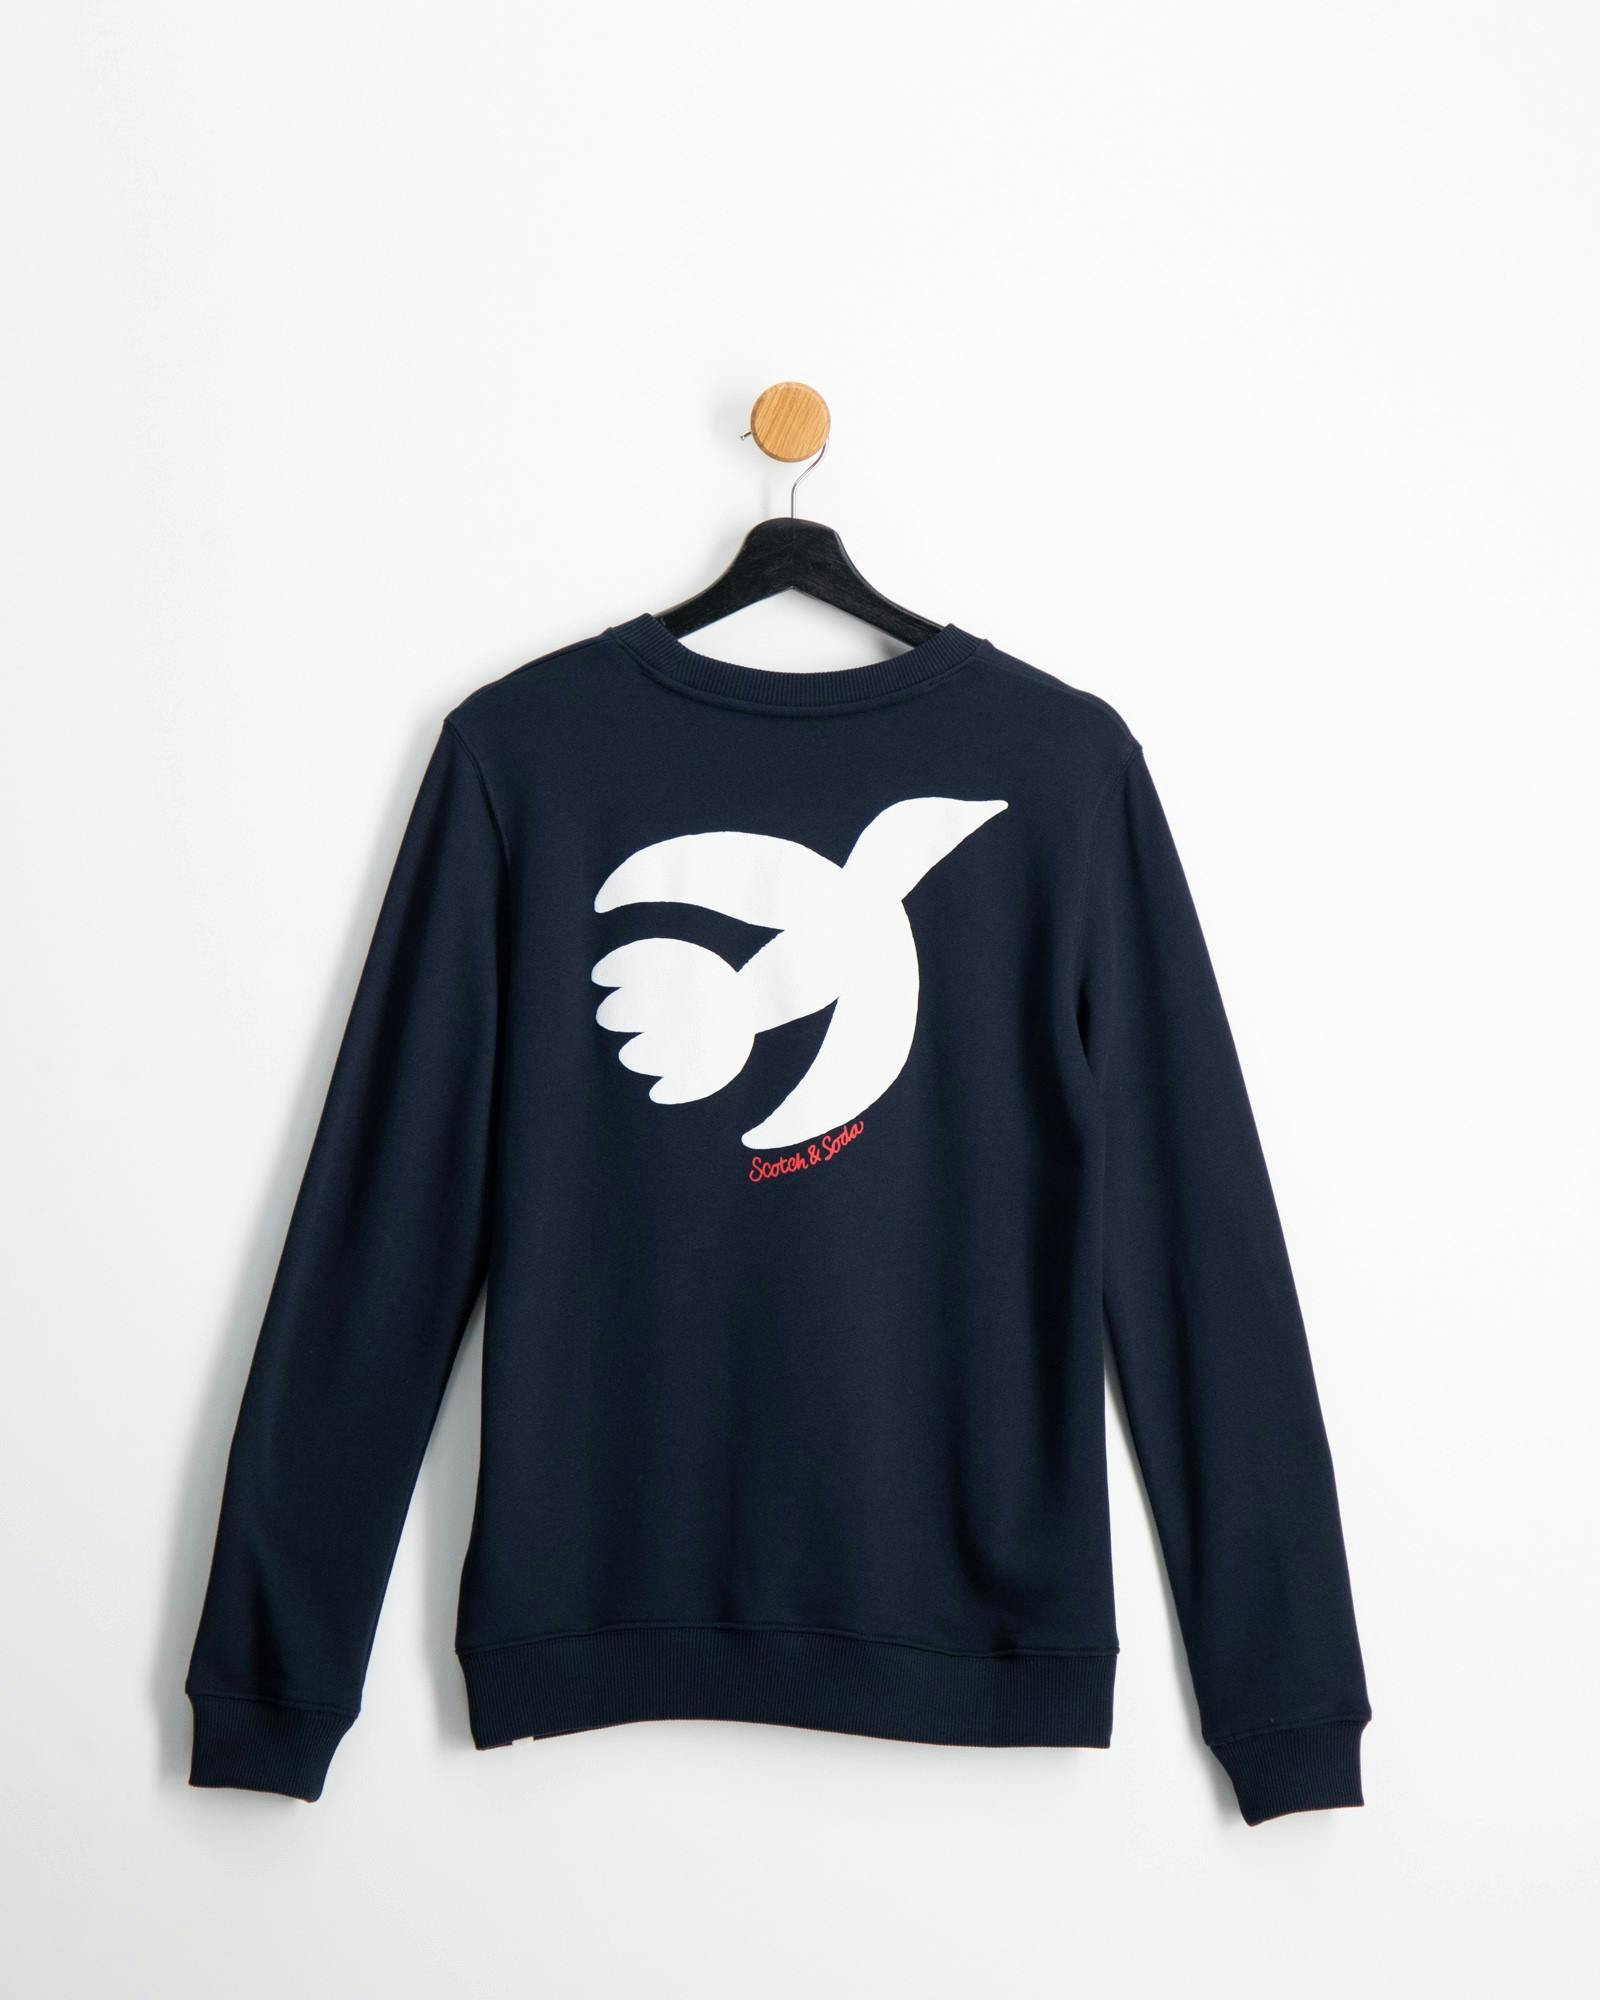 The free spirit peace bird sweatshirt